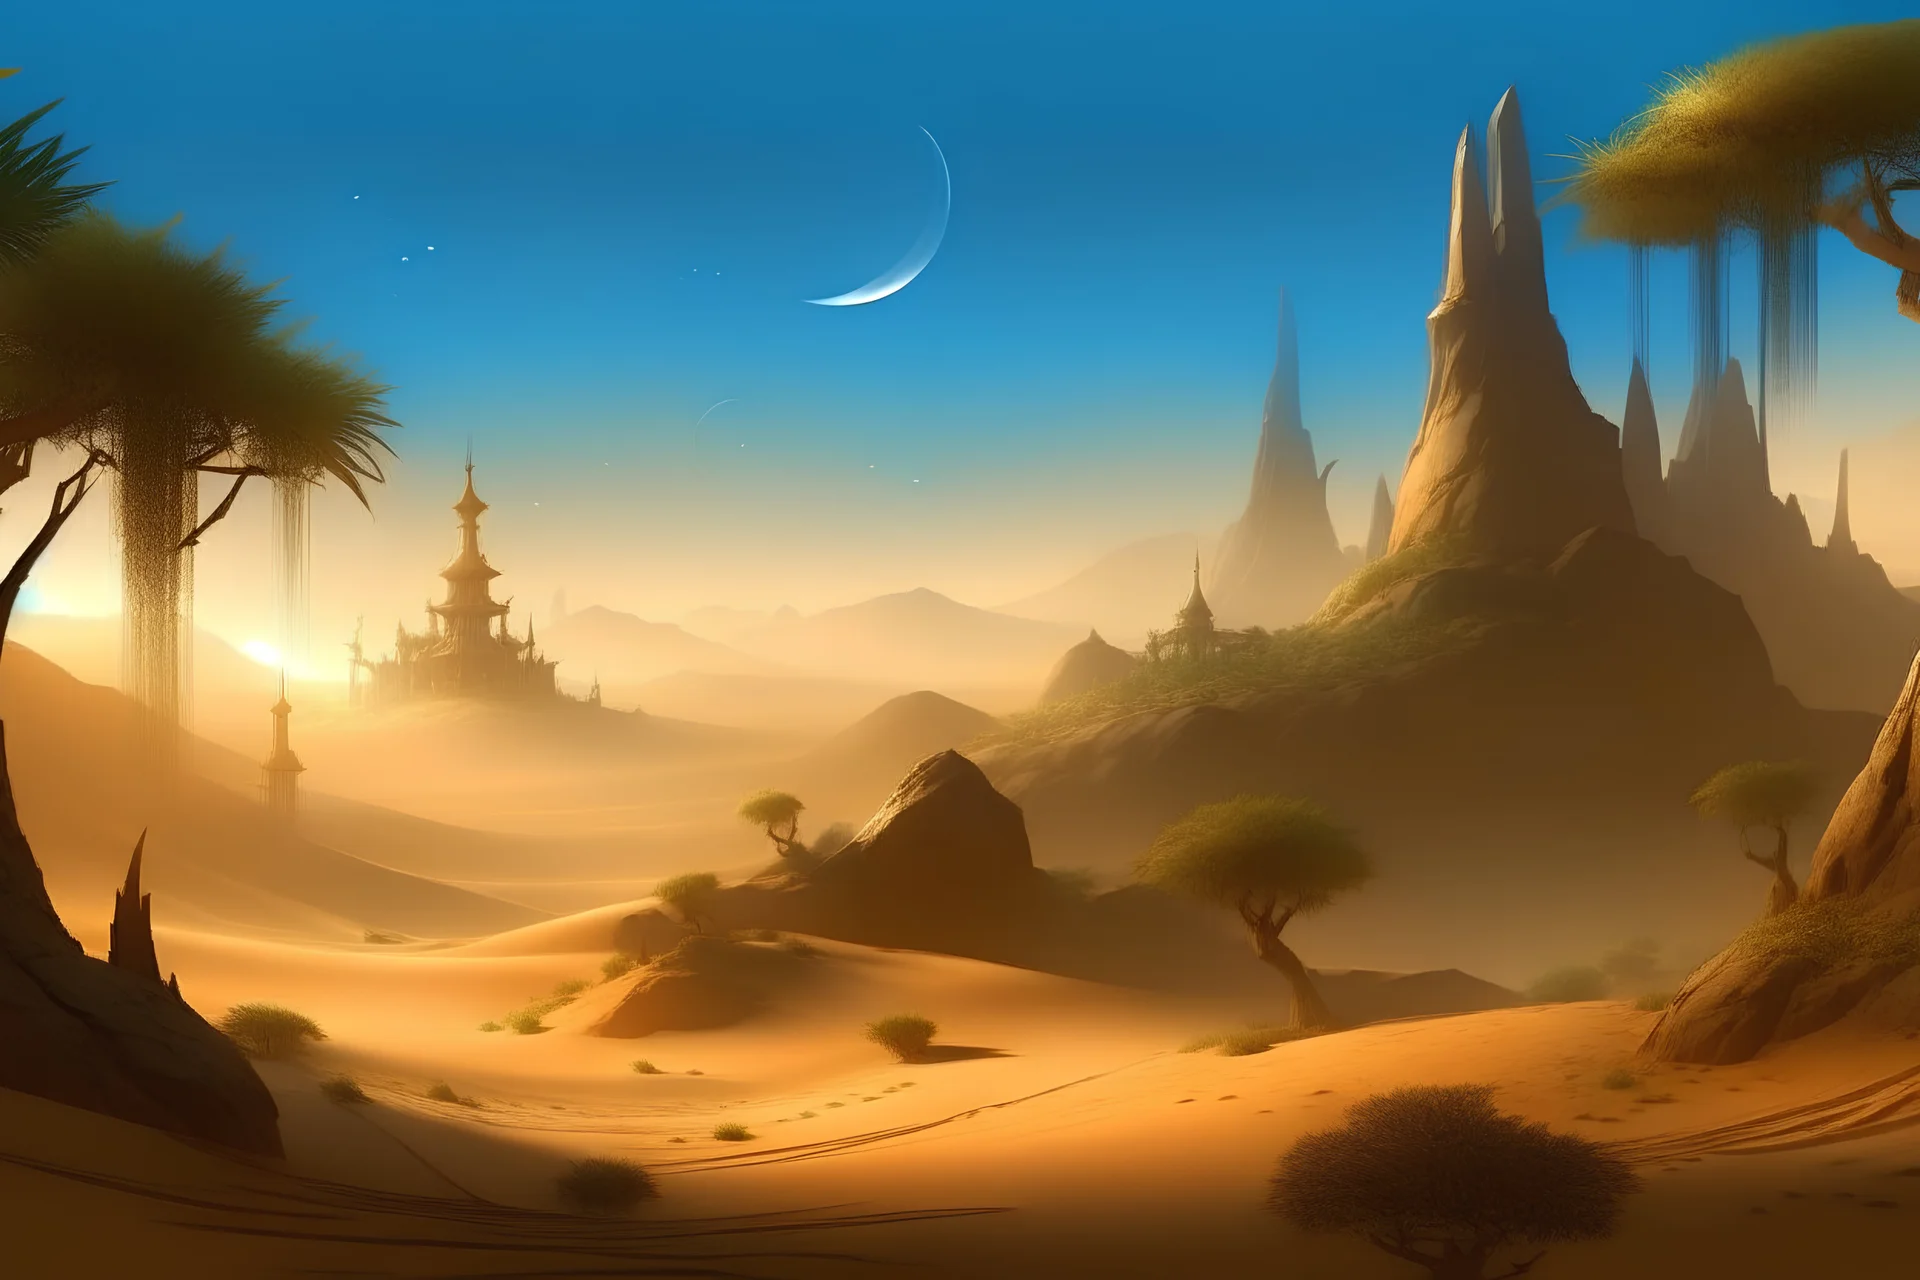 arabian desert side scroller game king castle in background night time moon light very dark with background city light